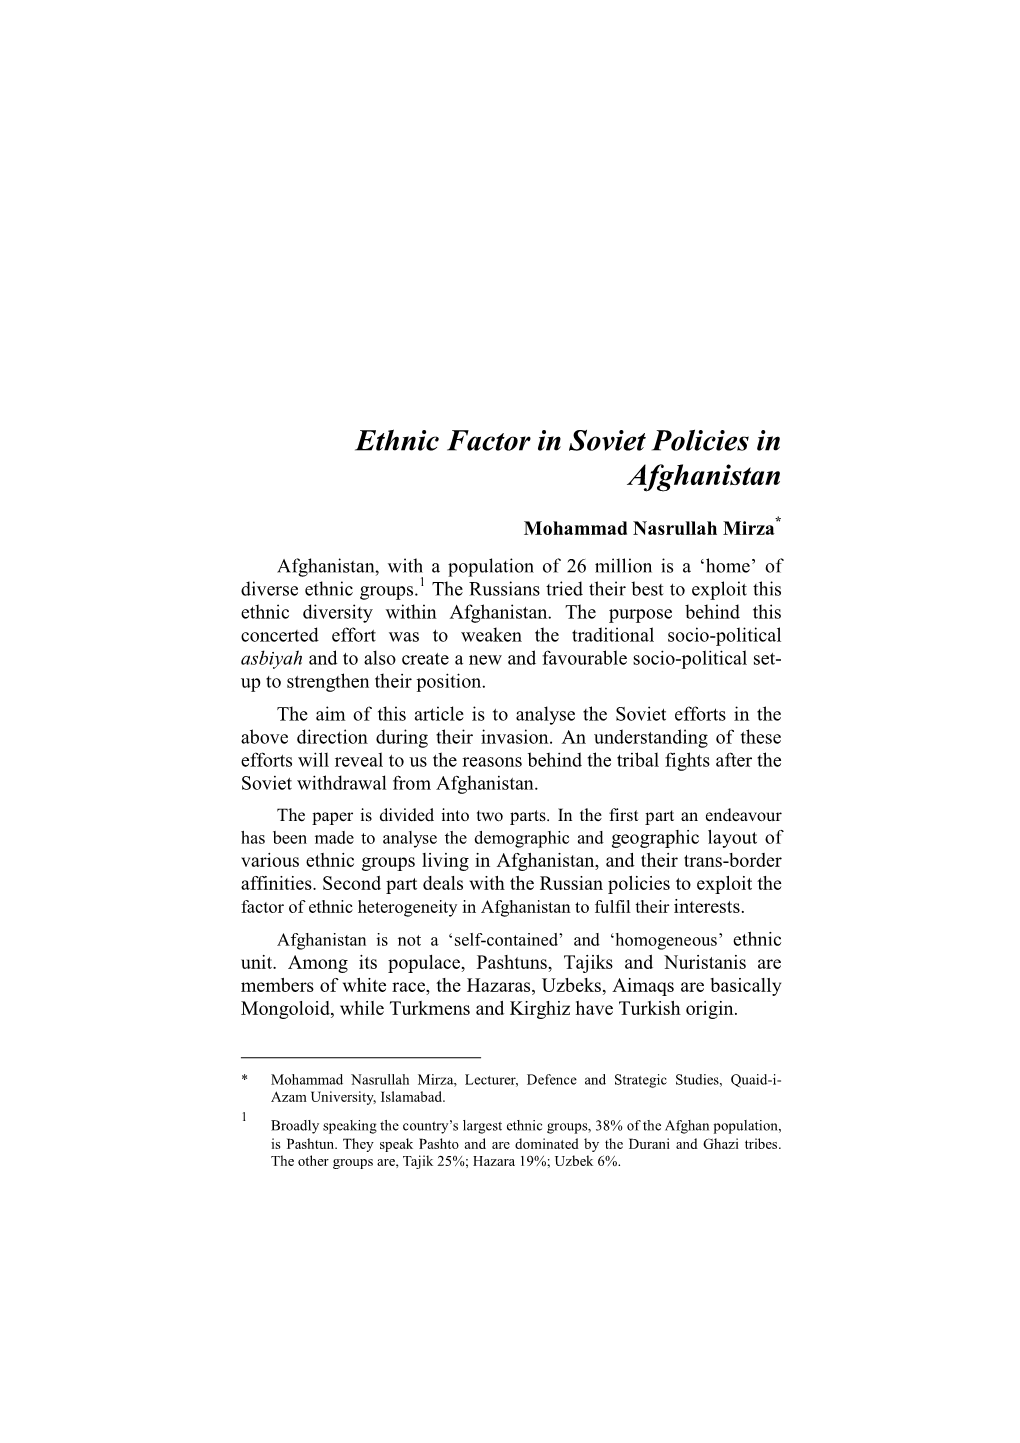 Ethnic Factor in Soviet Policies in Afghanistan